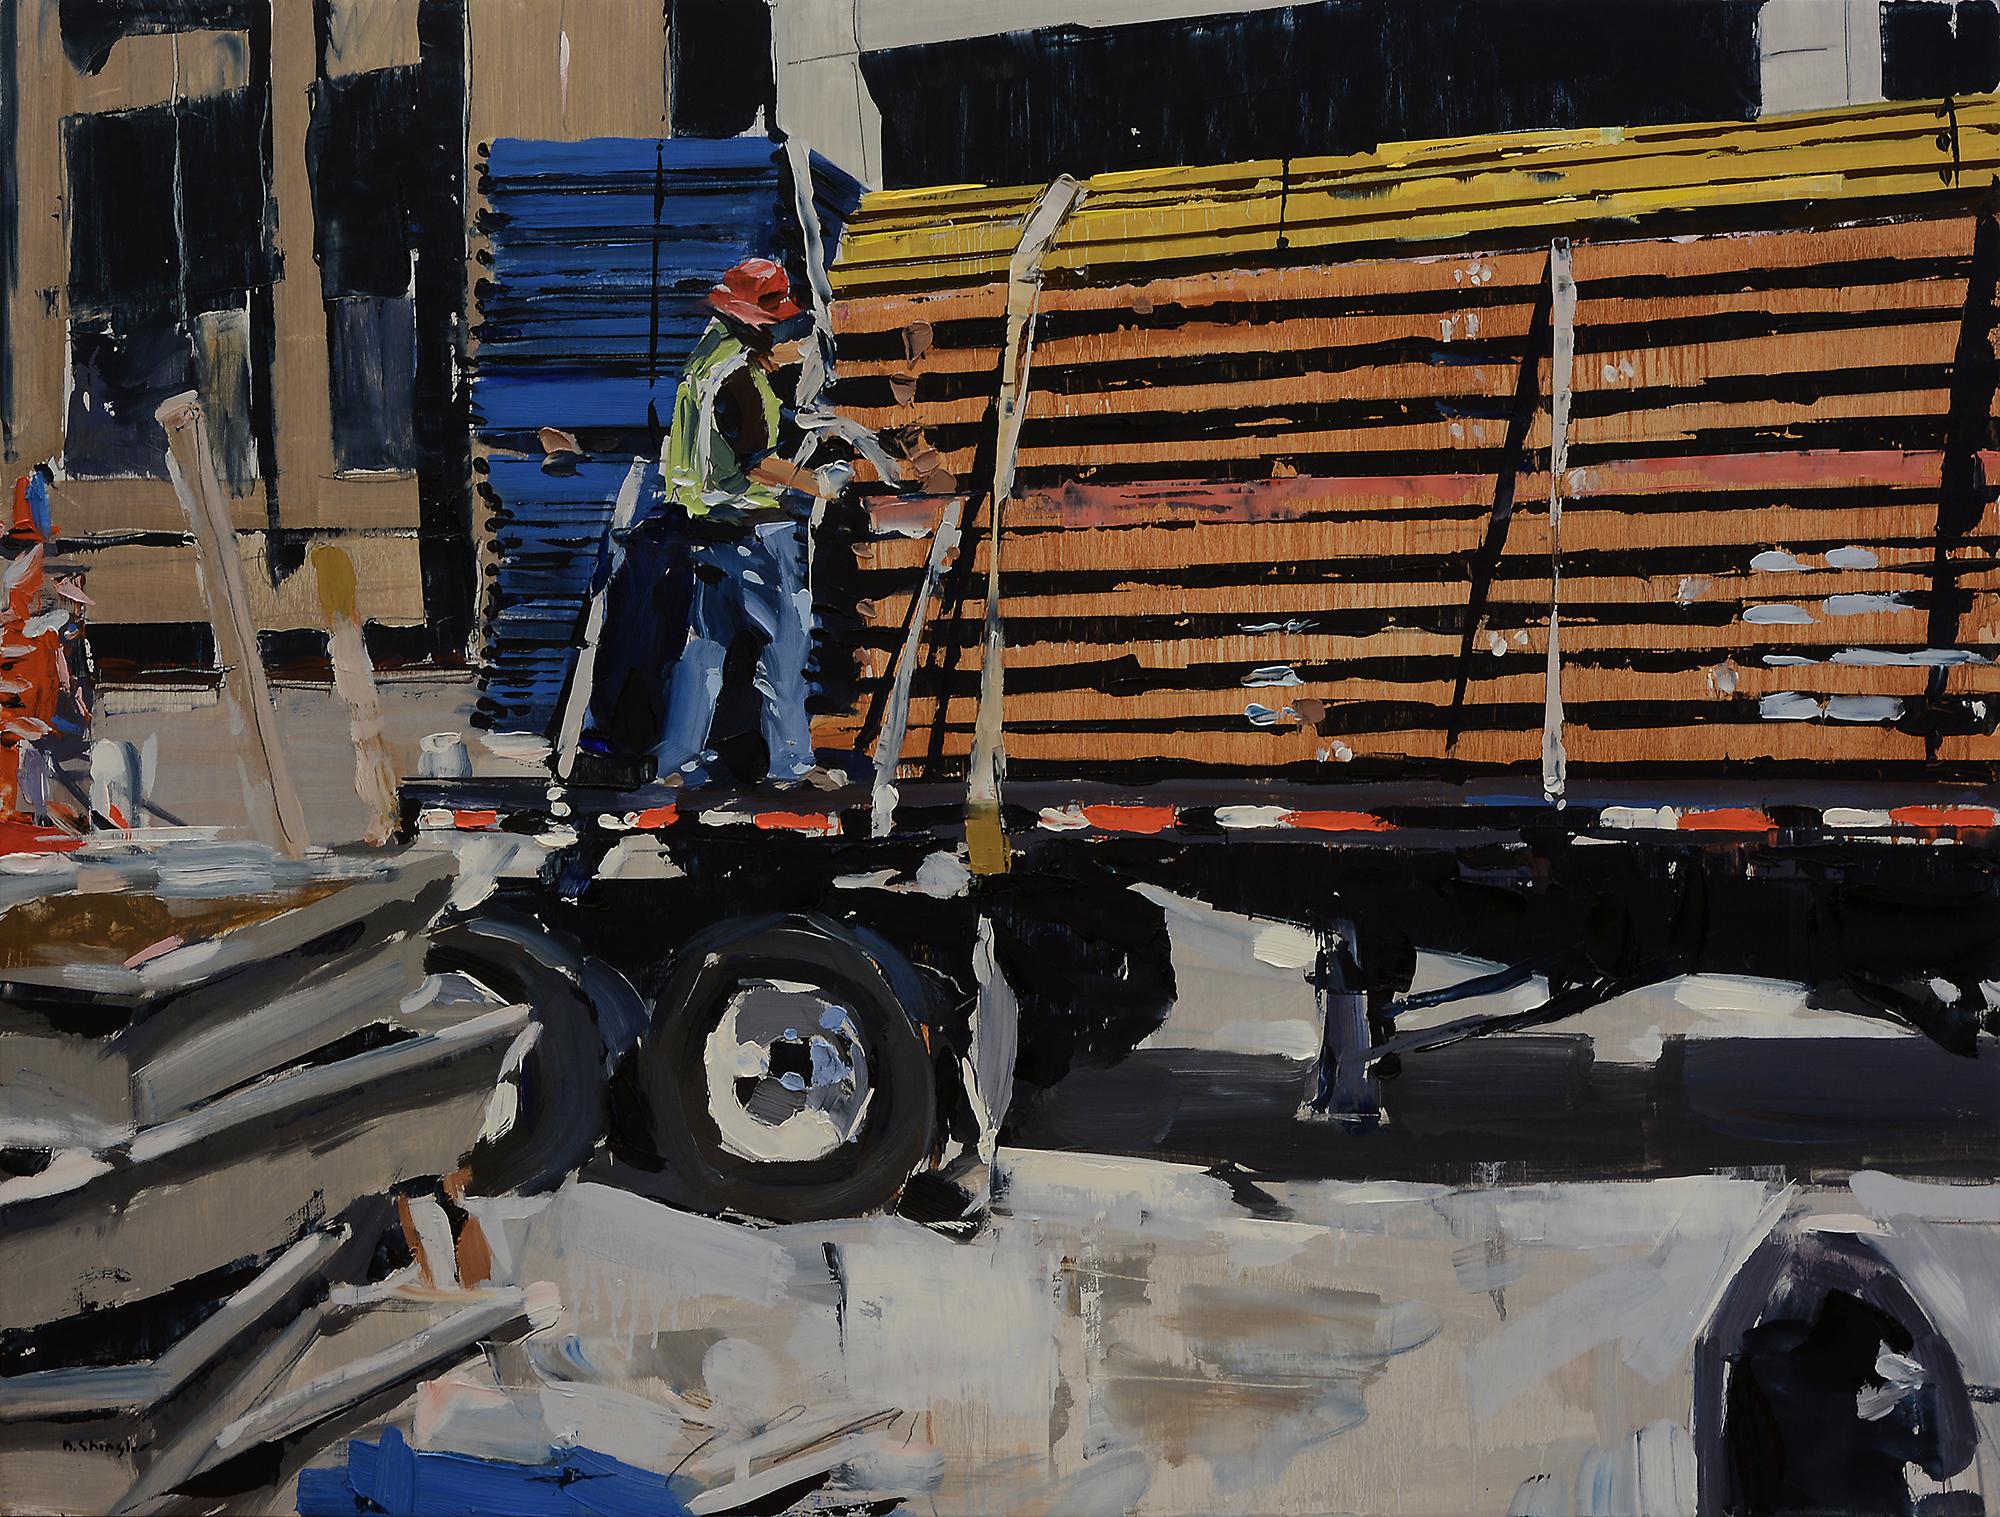 David Shingler Landscape Painting - "Man on Truck" Oil Painting